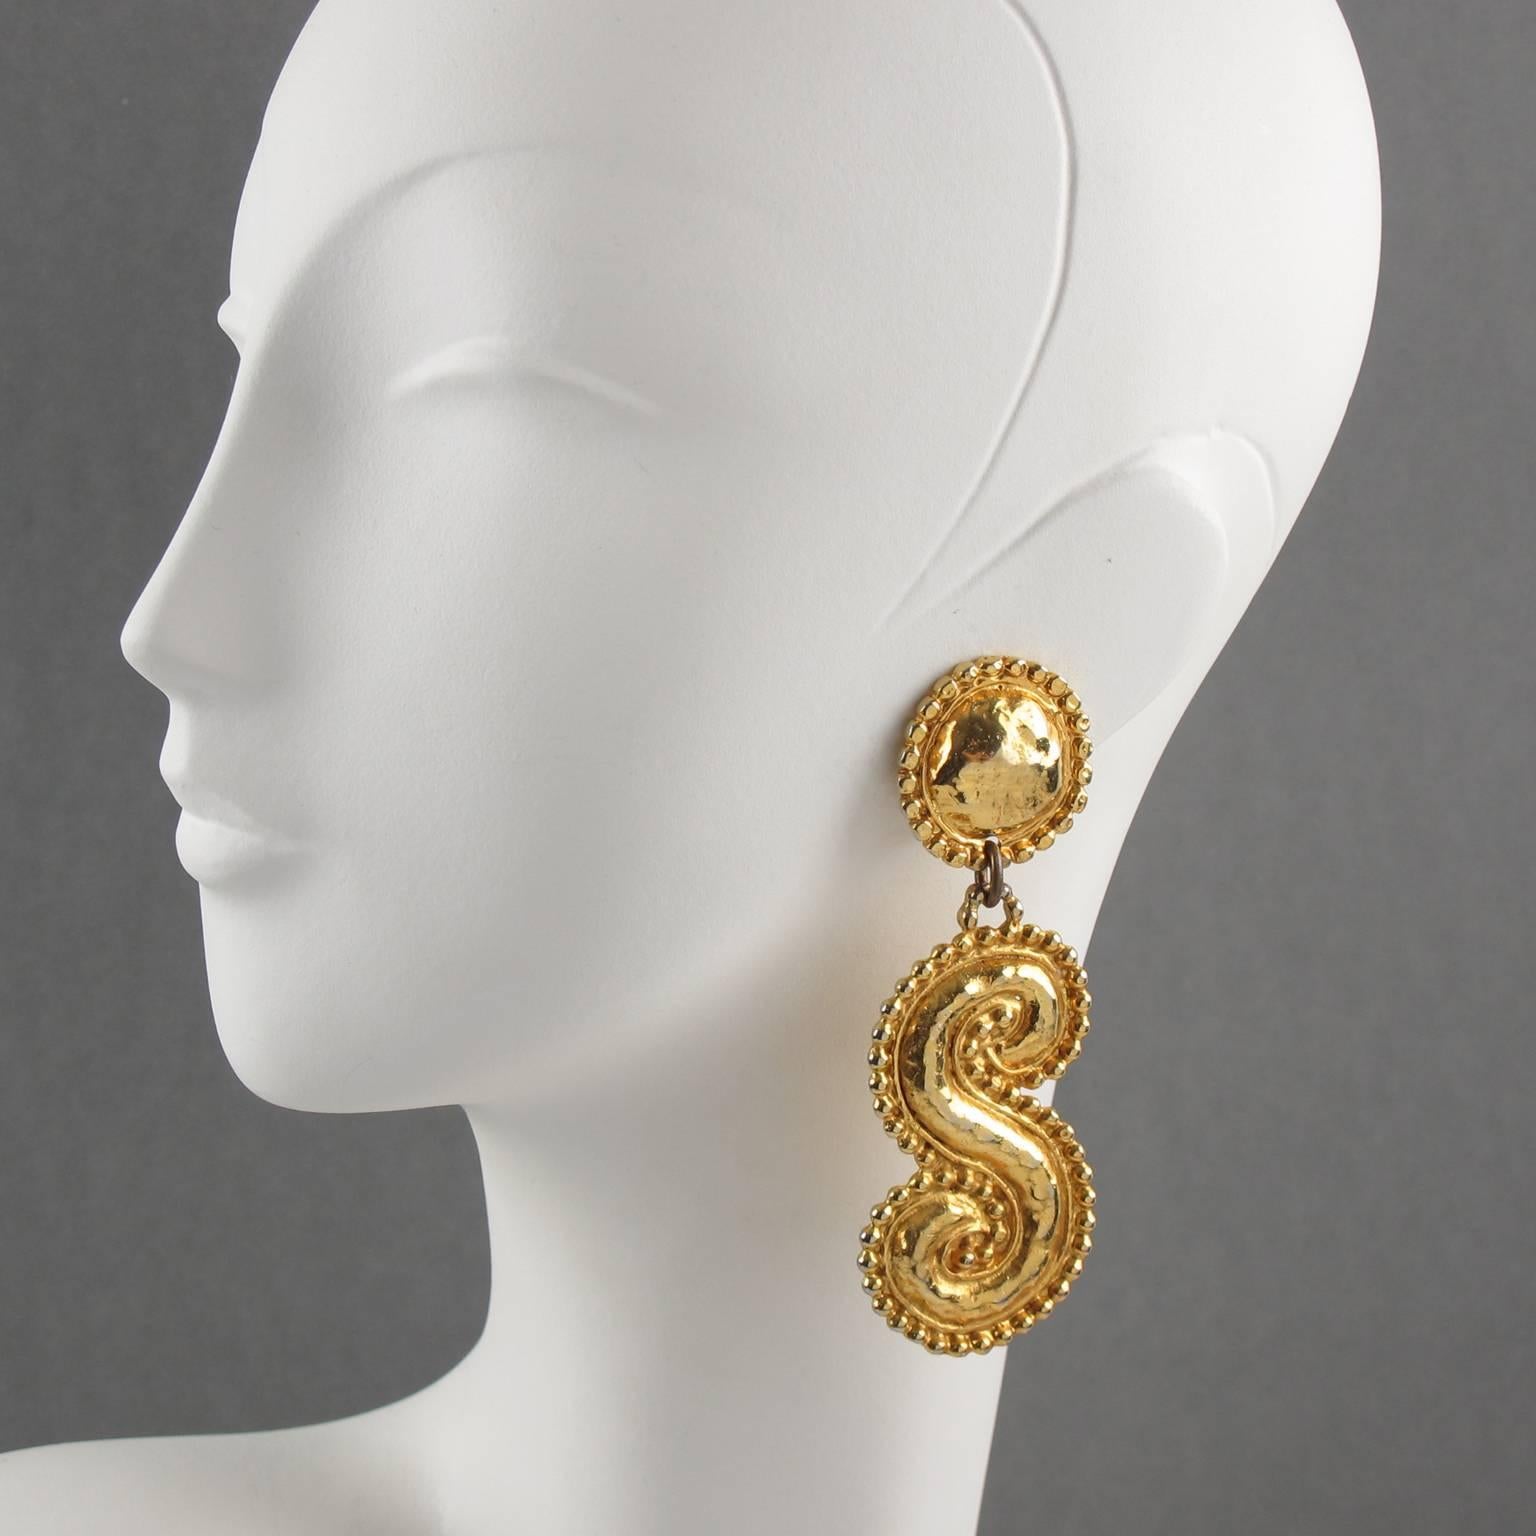 Impressive French designer Edouard Rambaud Paris signed clip on earrings. Oversized 